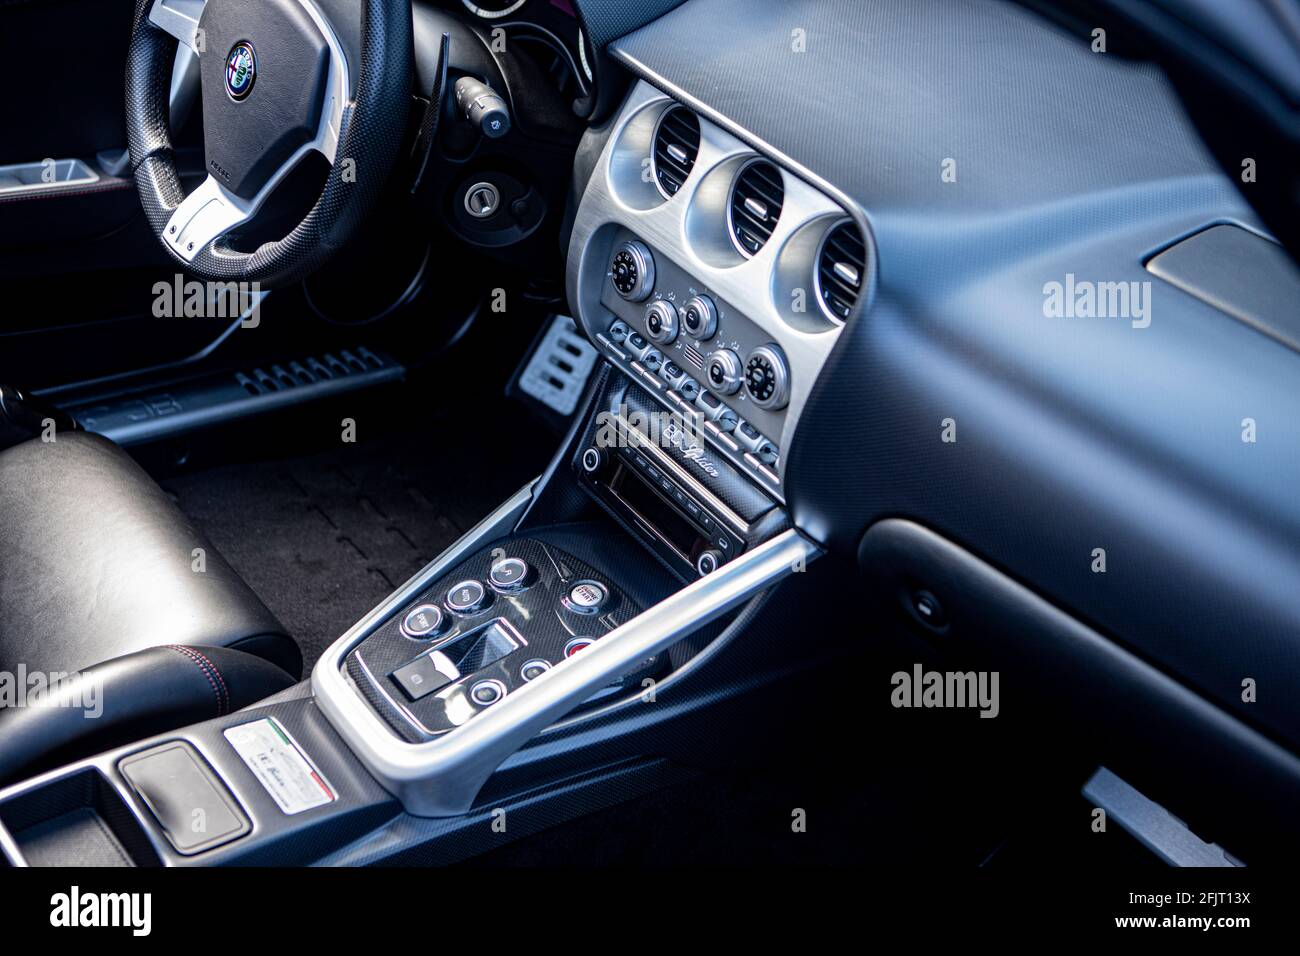 2013 Alfa Romeo 8C Spider interior dashboard Stock Photo